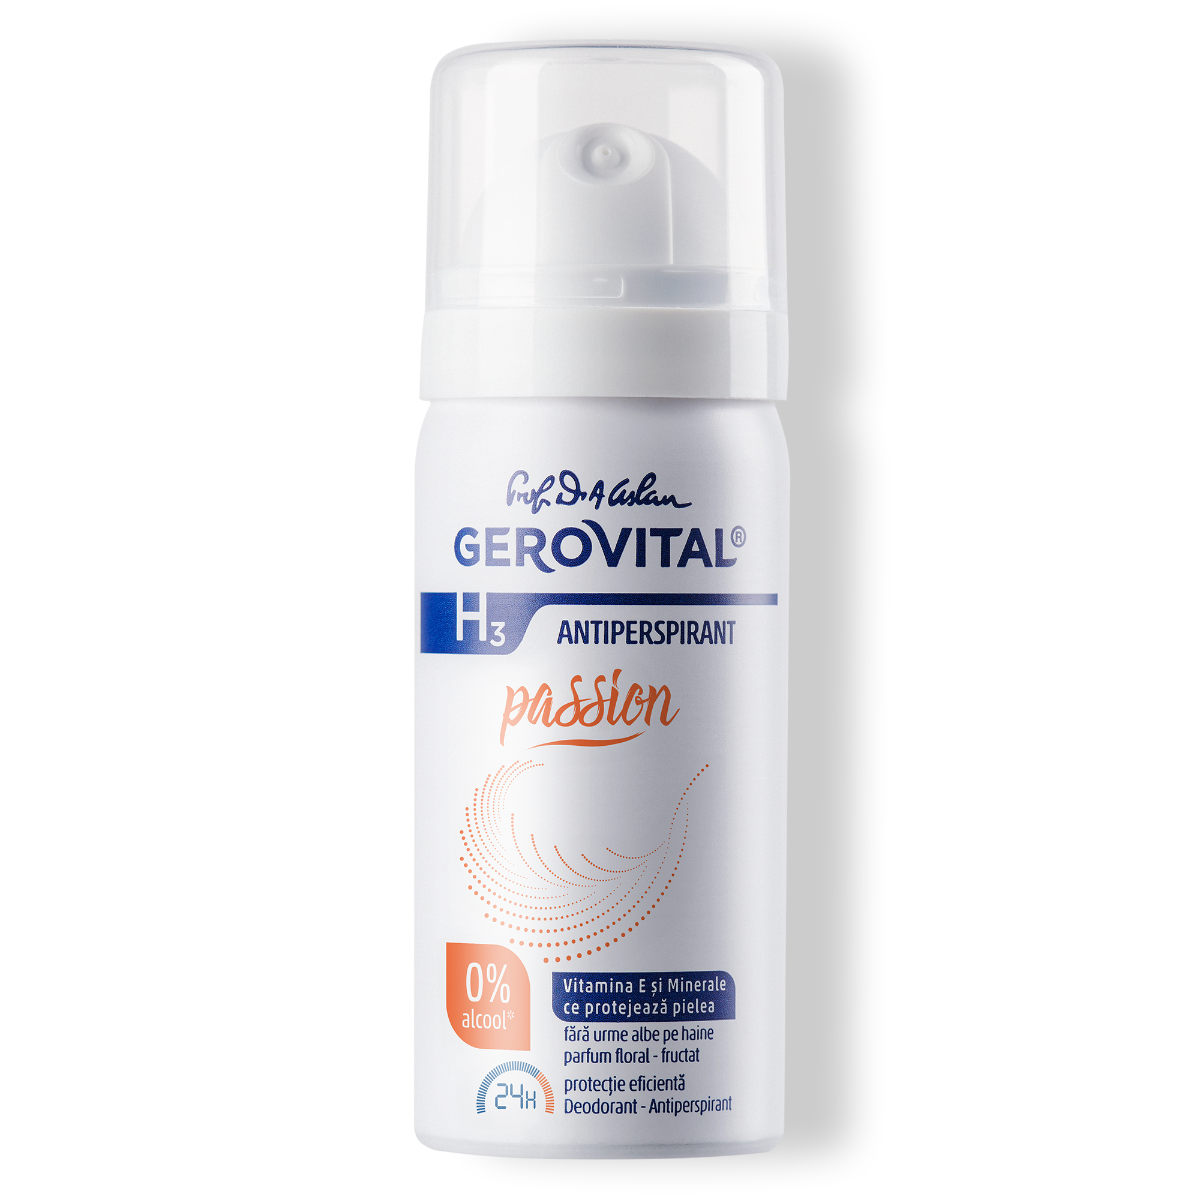 Deodorant Antiperspirant Gerovital H3 – Passion 40 Ml